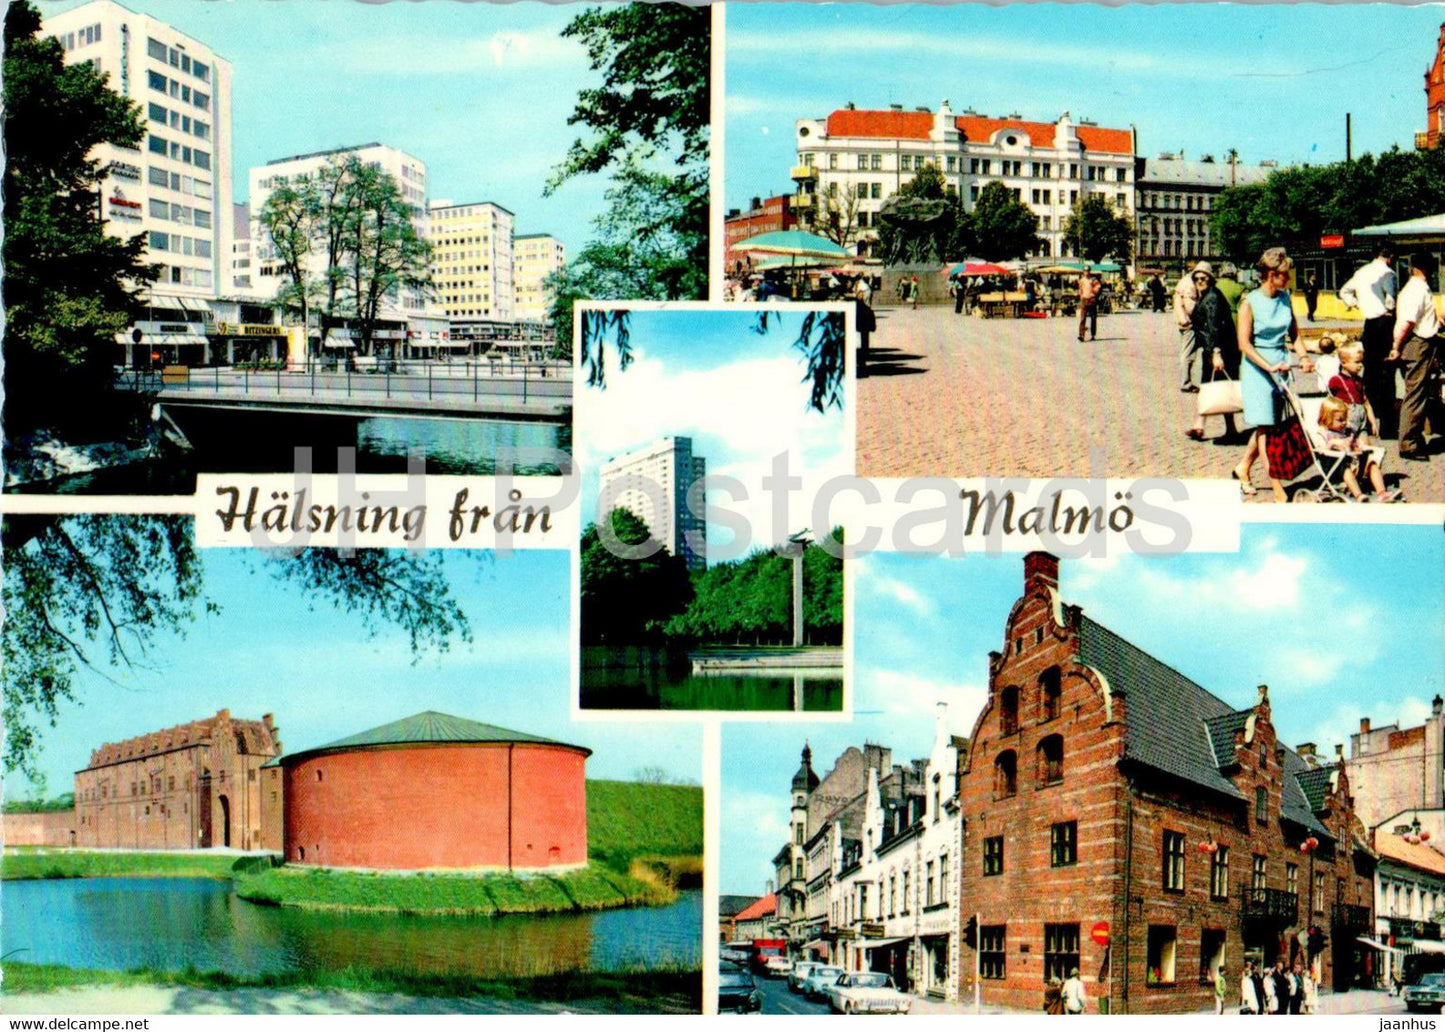 Malmo - Halsning Fran Malmo - 517 - 1977 - Sweden - used - JH Postcards